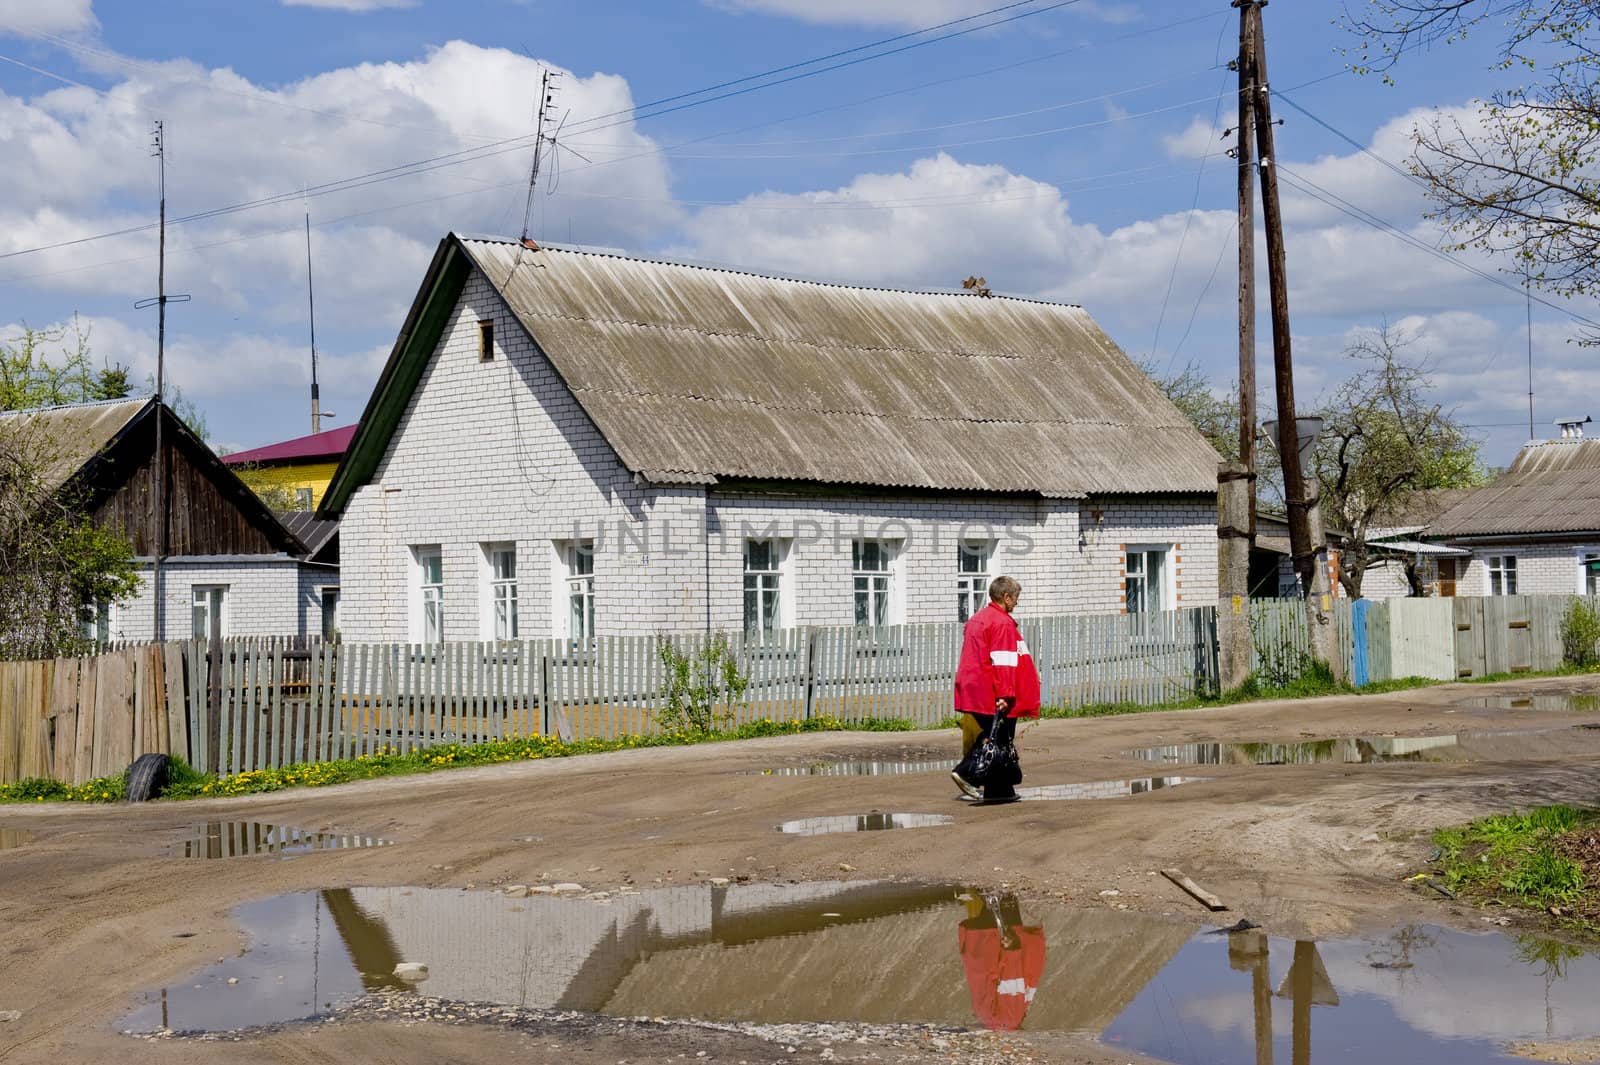 Rural street, taken in Russian province on May 2011